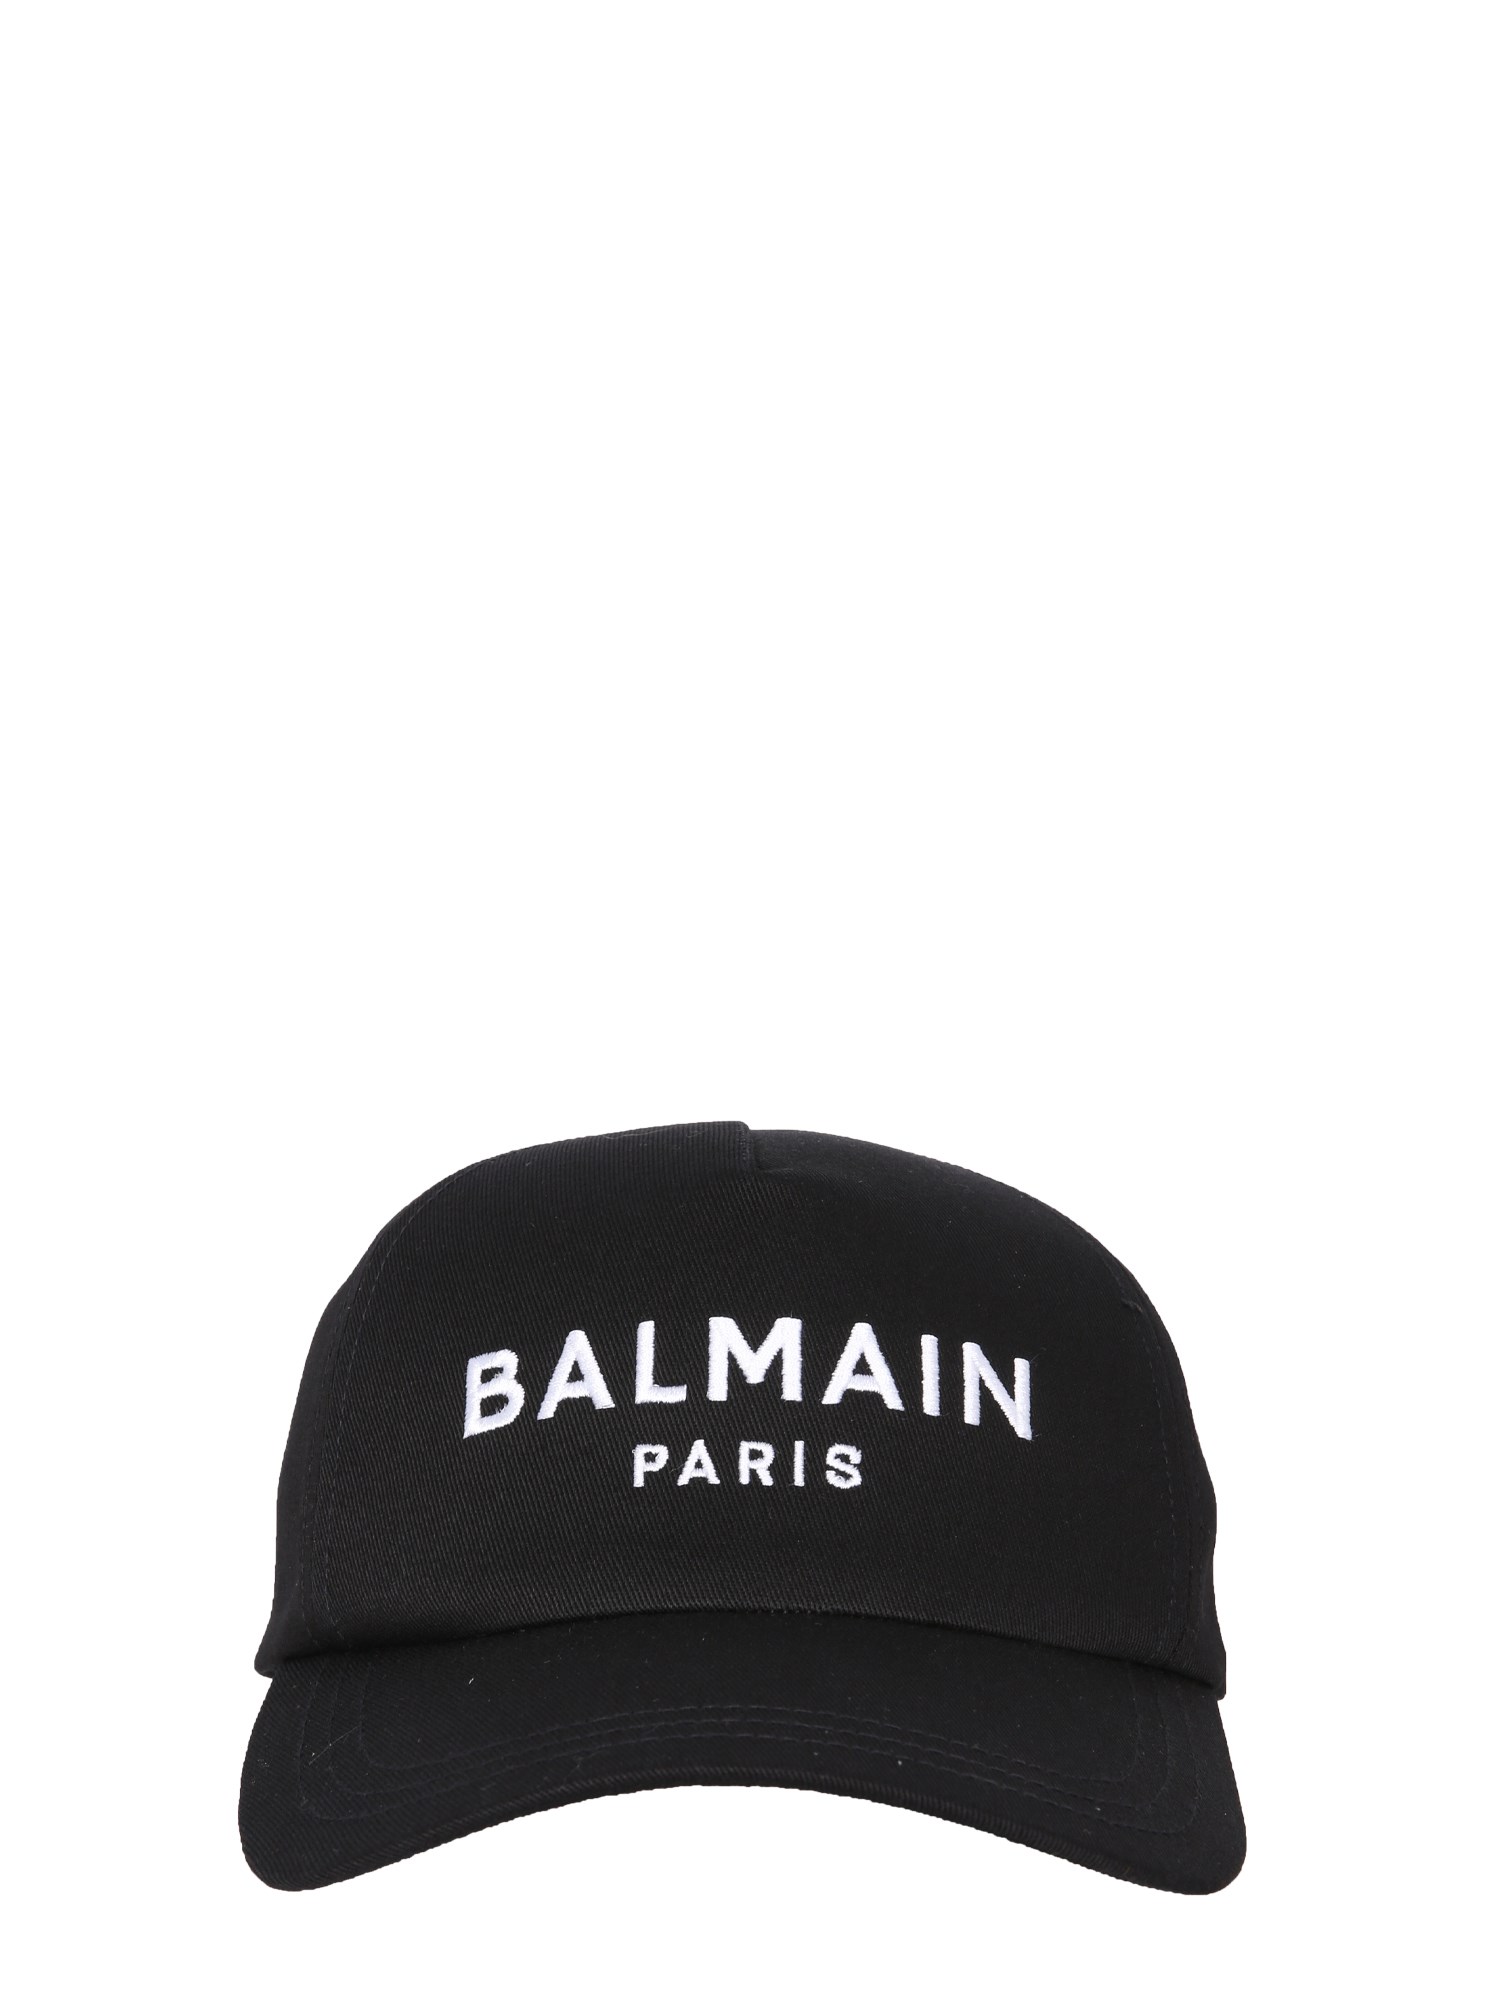 balmain baseball hat with logo embroidered